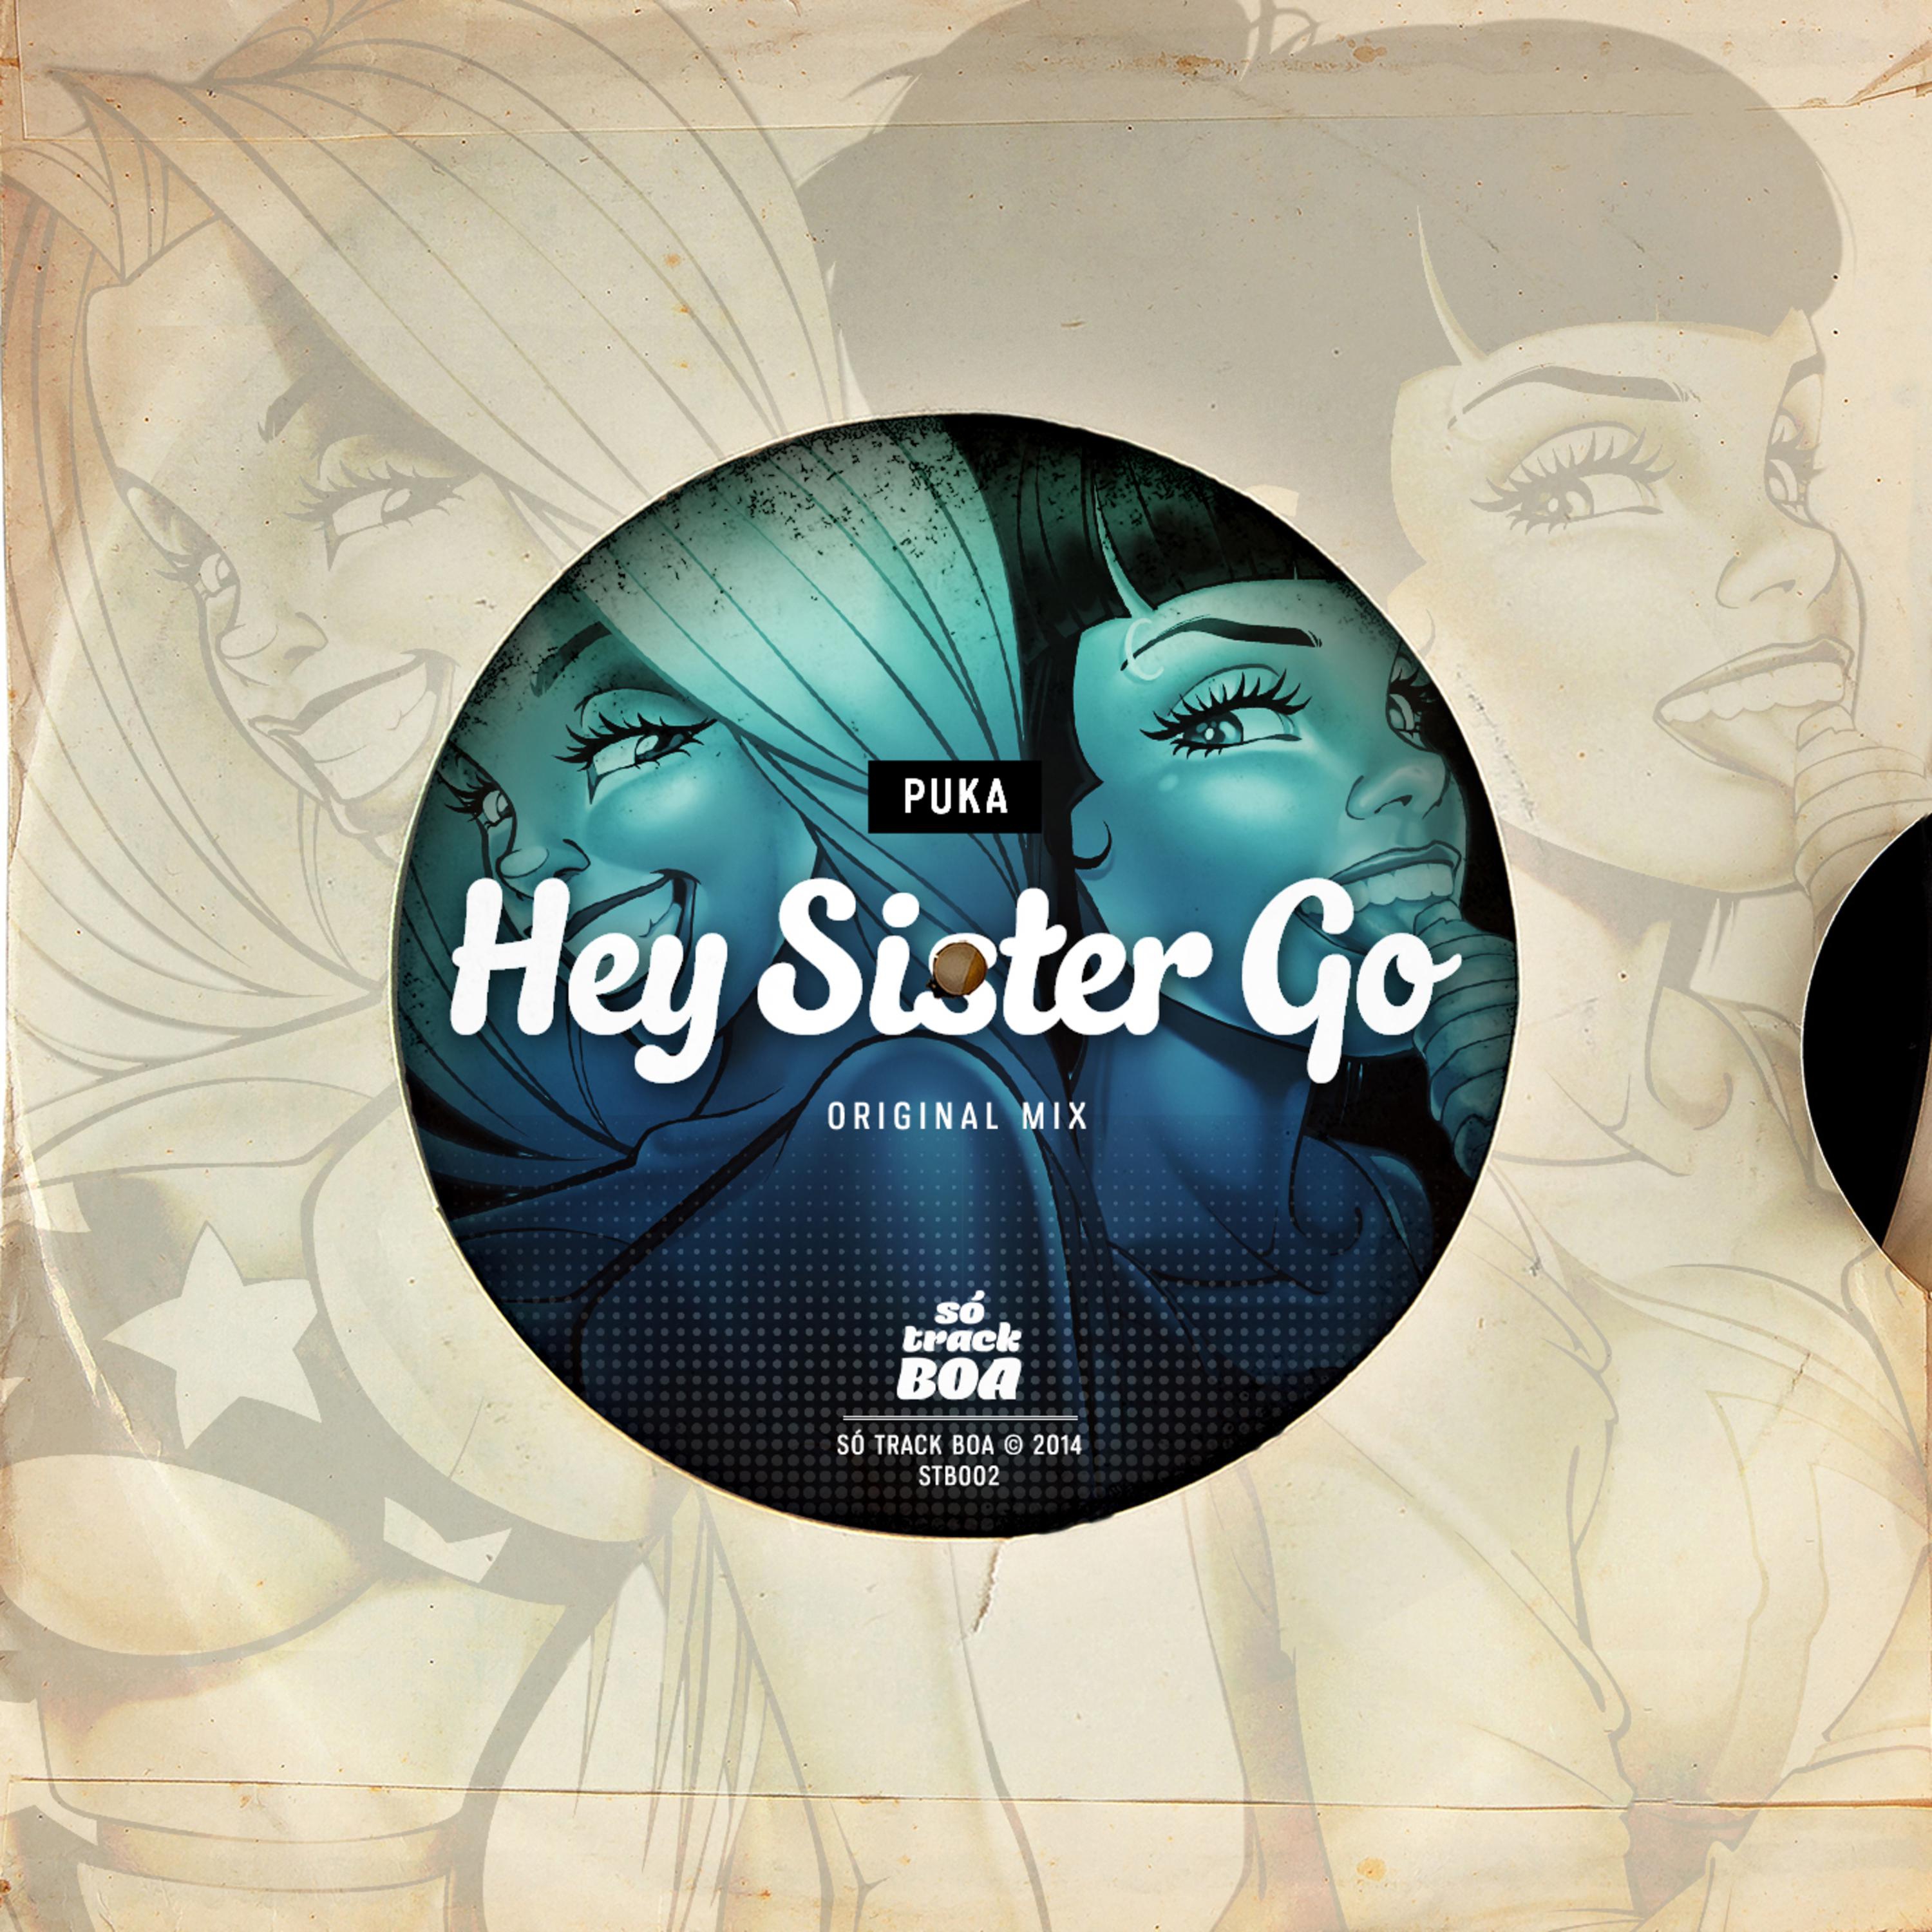 Hey sister. Одежда Hey sister. Go go sisters. Hey sister go sister.